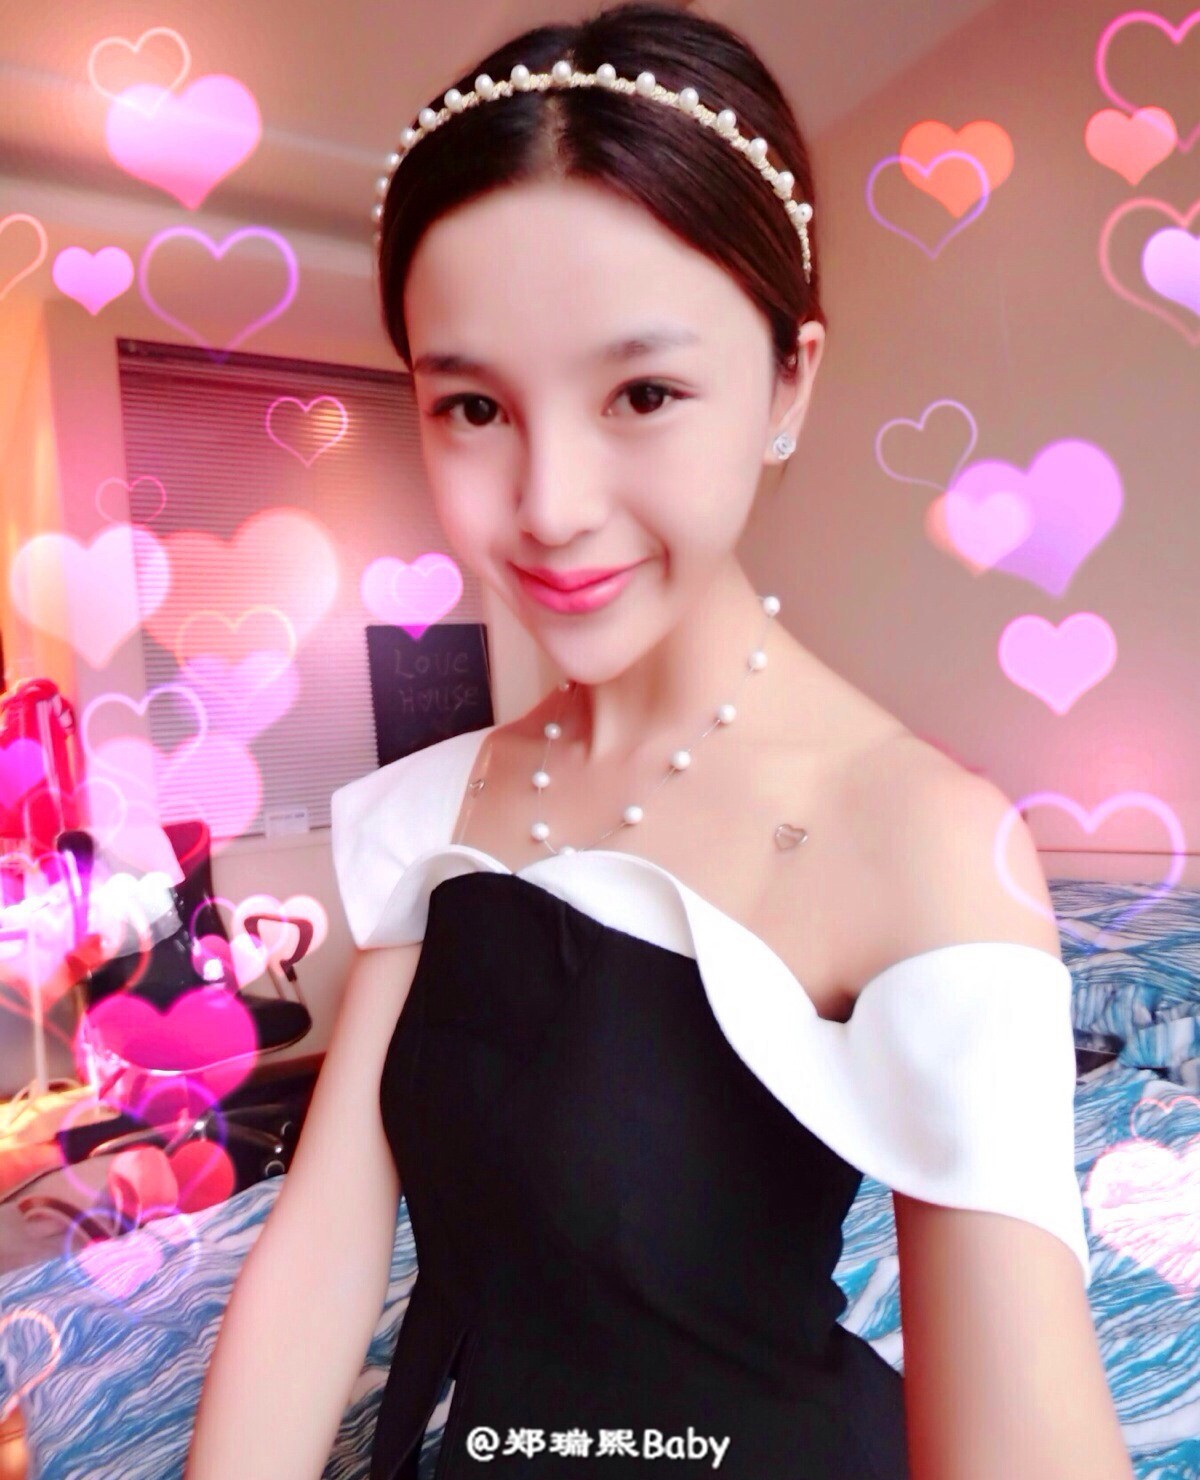 Tweet girl issue 42 photos of Zheng Ruixi's baby